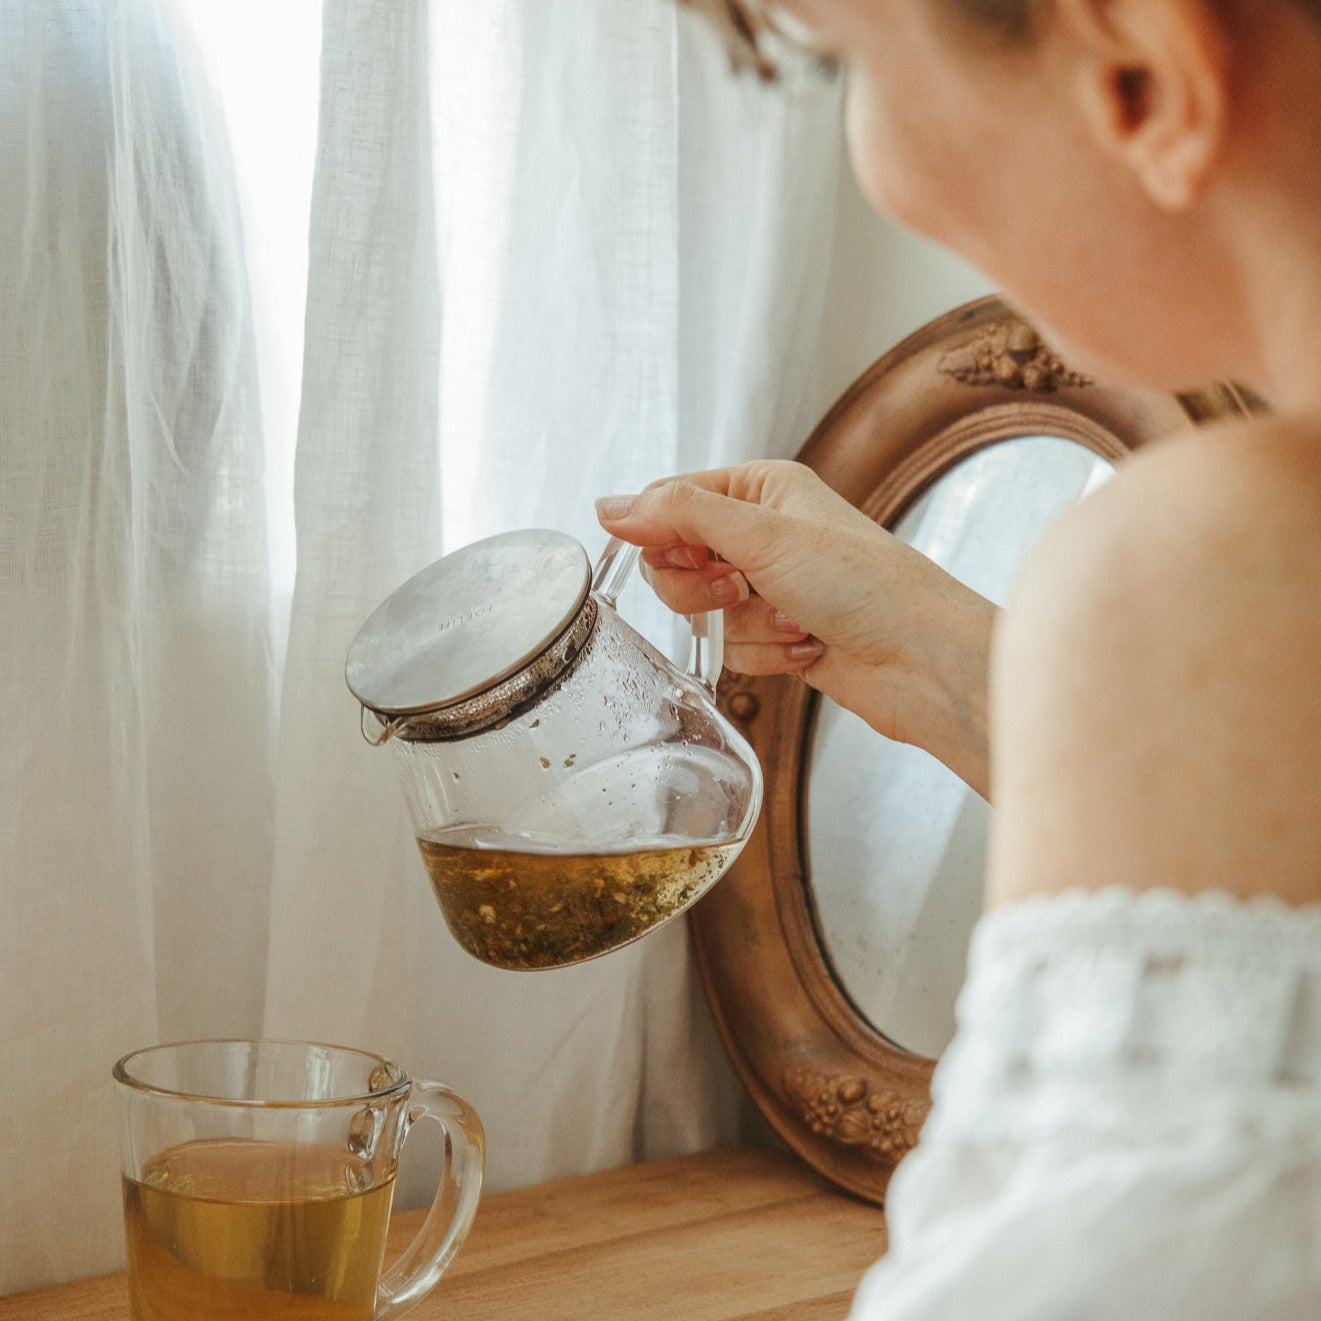 FORLIFE Fuji Glass Teapot - Teapot for Loose Leaf Tea | Heavenly Tea Leaves